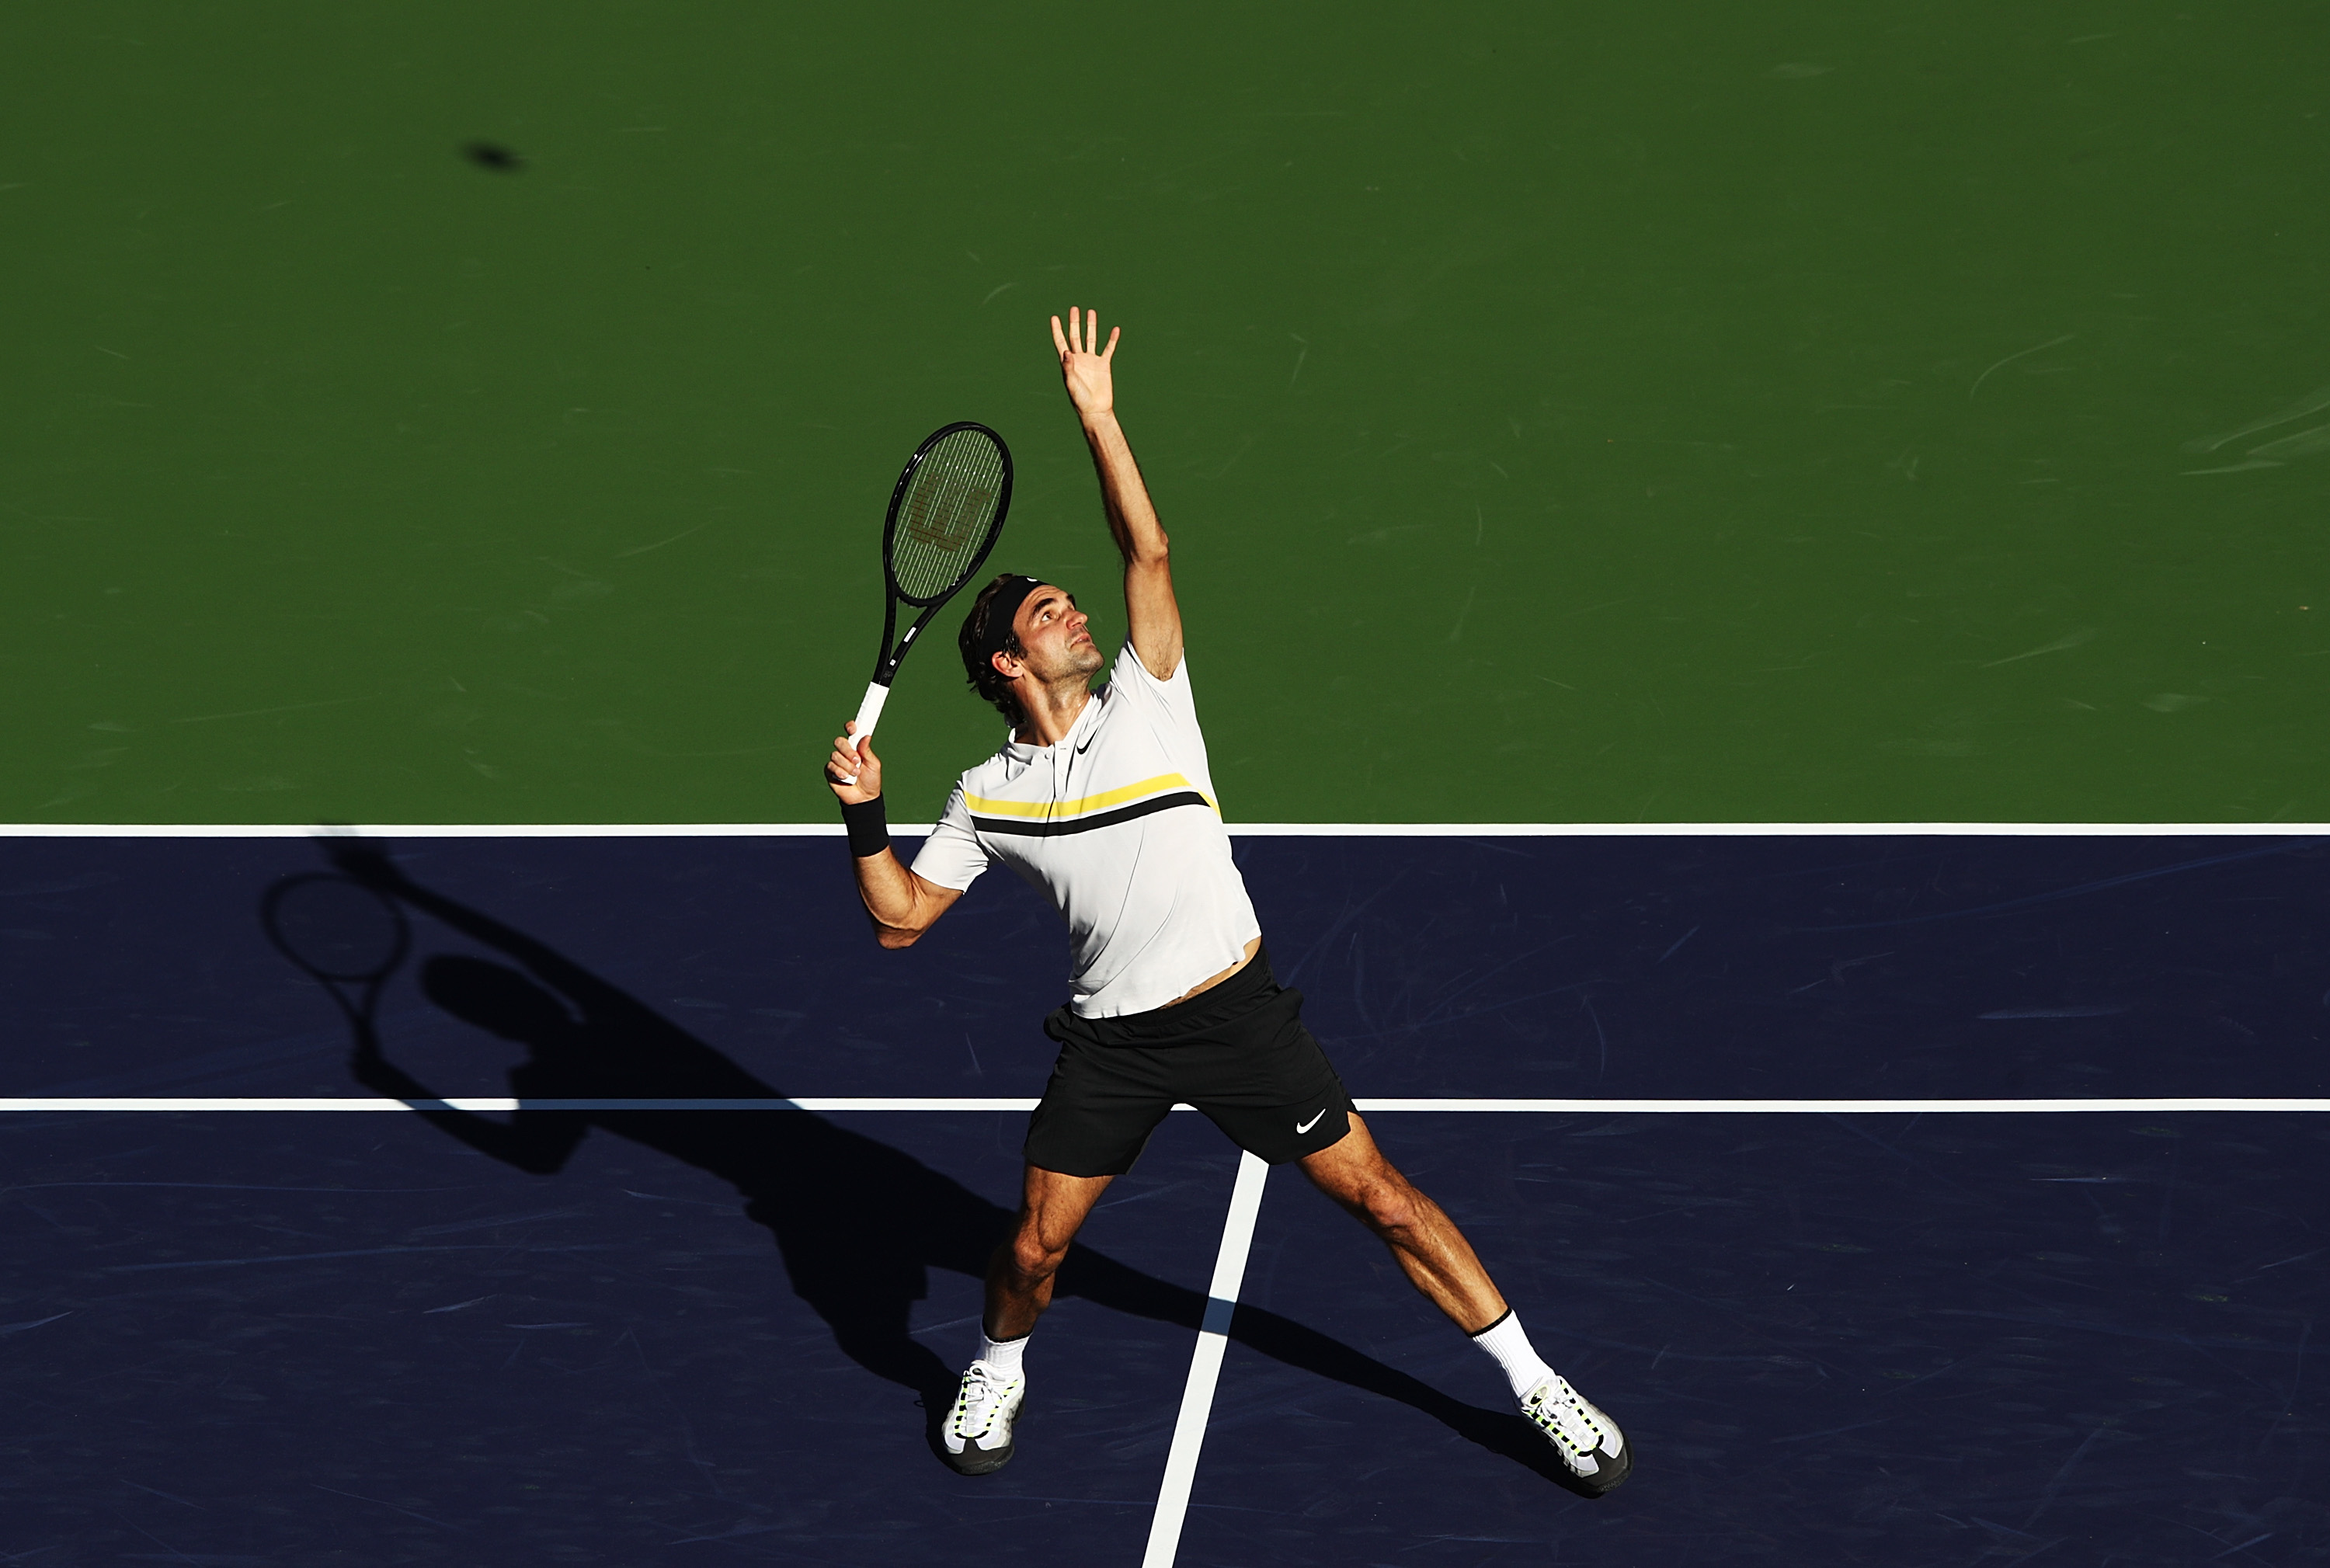 Удара теннисе 6 букв. Теннис удары Федерер. Федерер Роджер удар слева. Удар смэш в большом теннисе. Роджер Федерер удар слета.